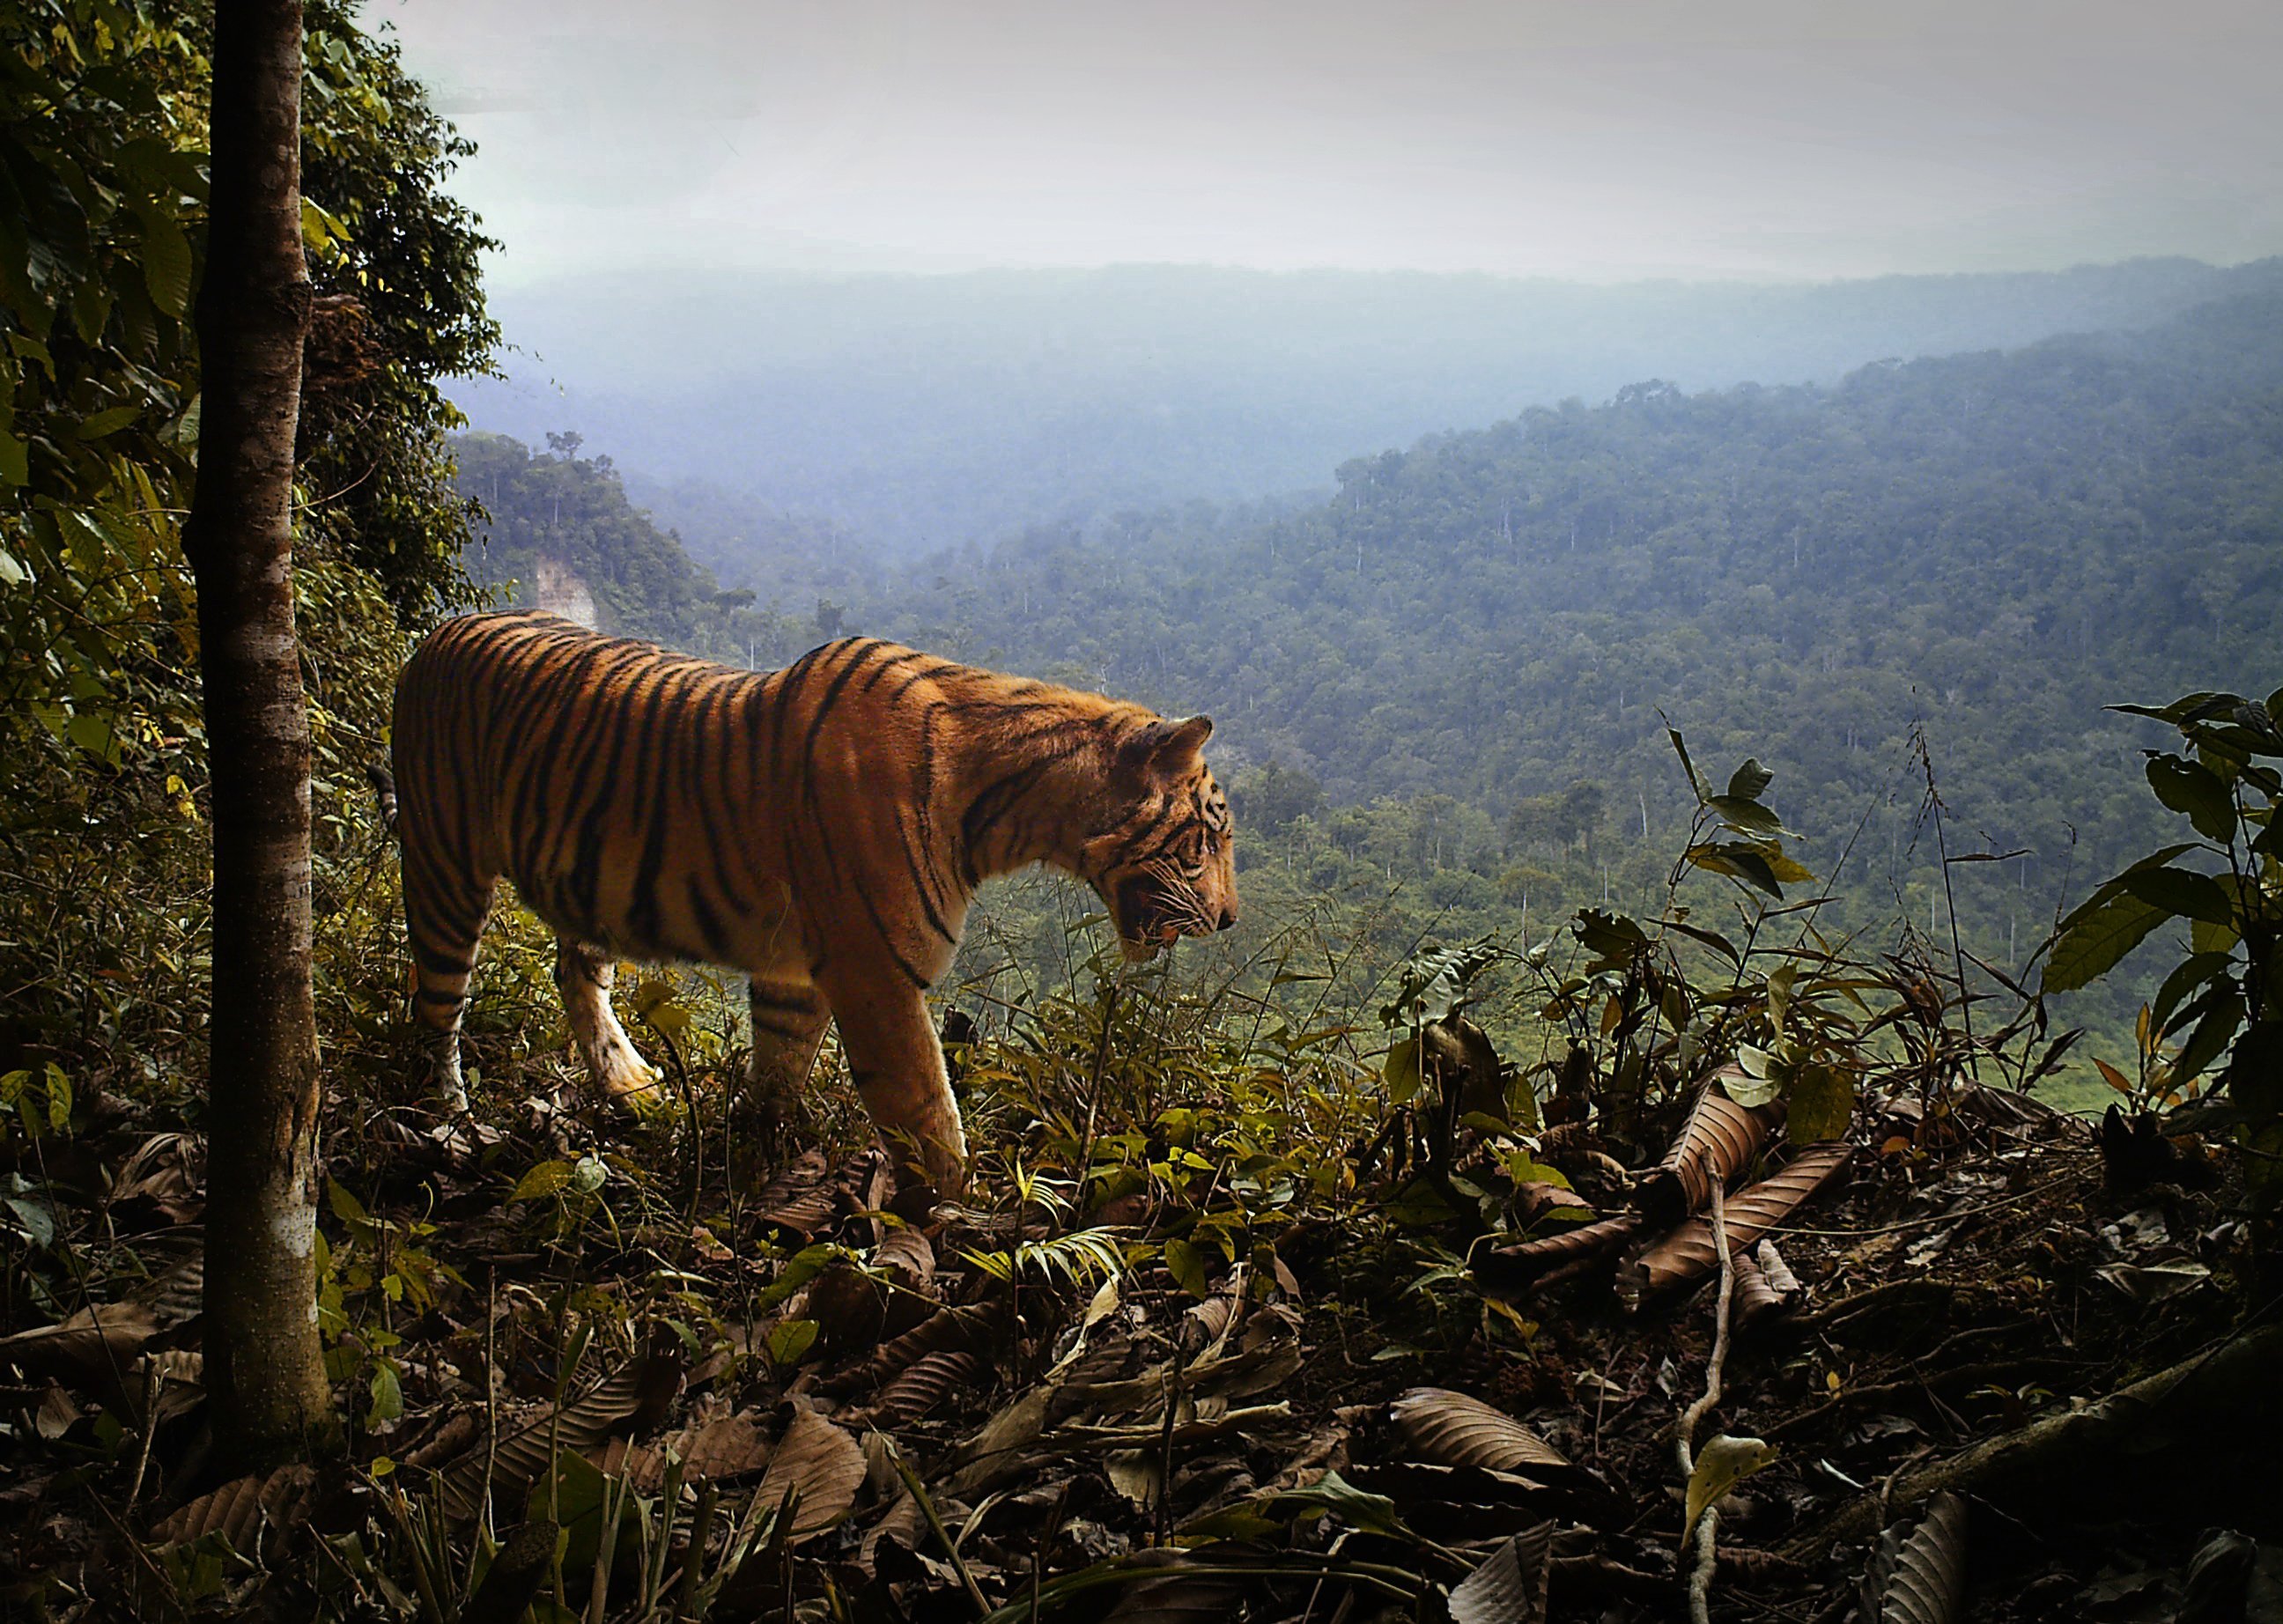 Джунгли внутри тебя. Суматра тигр. Тигр тропического леса Индии. Малайский тигр (Panthera Tigris Jacksoni). Суматра остров фауна.